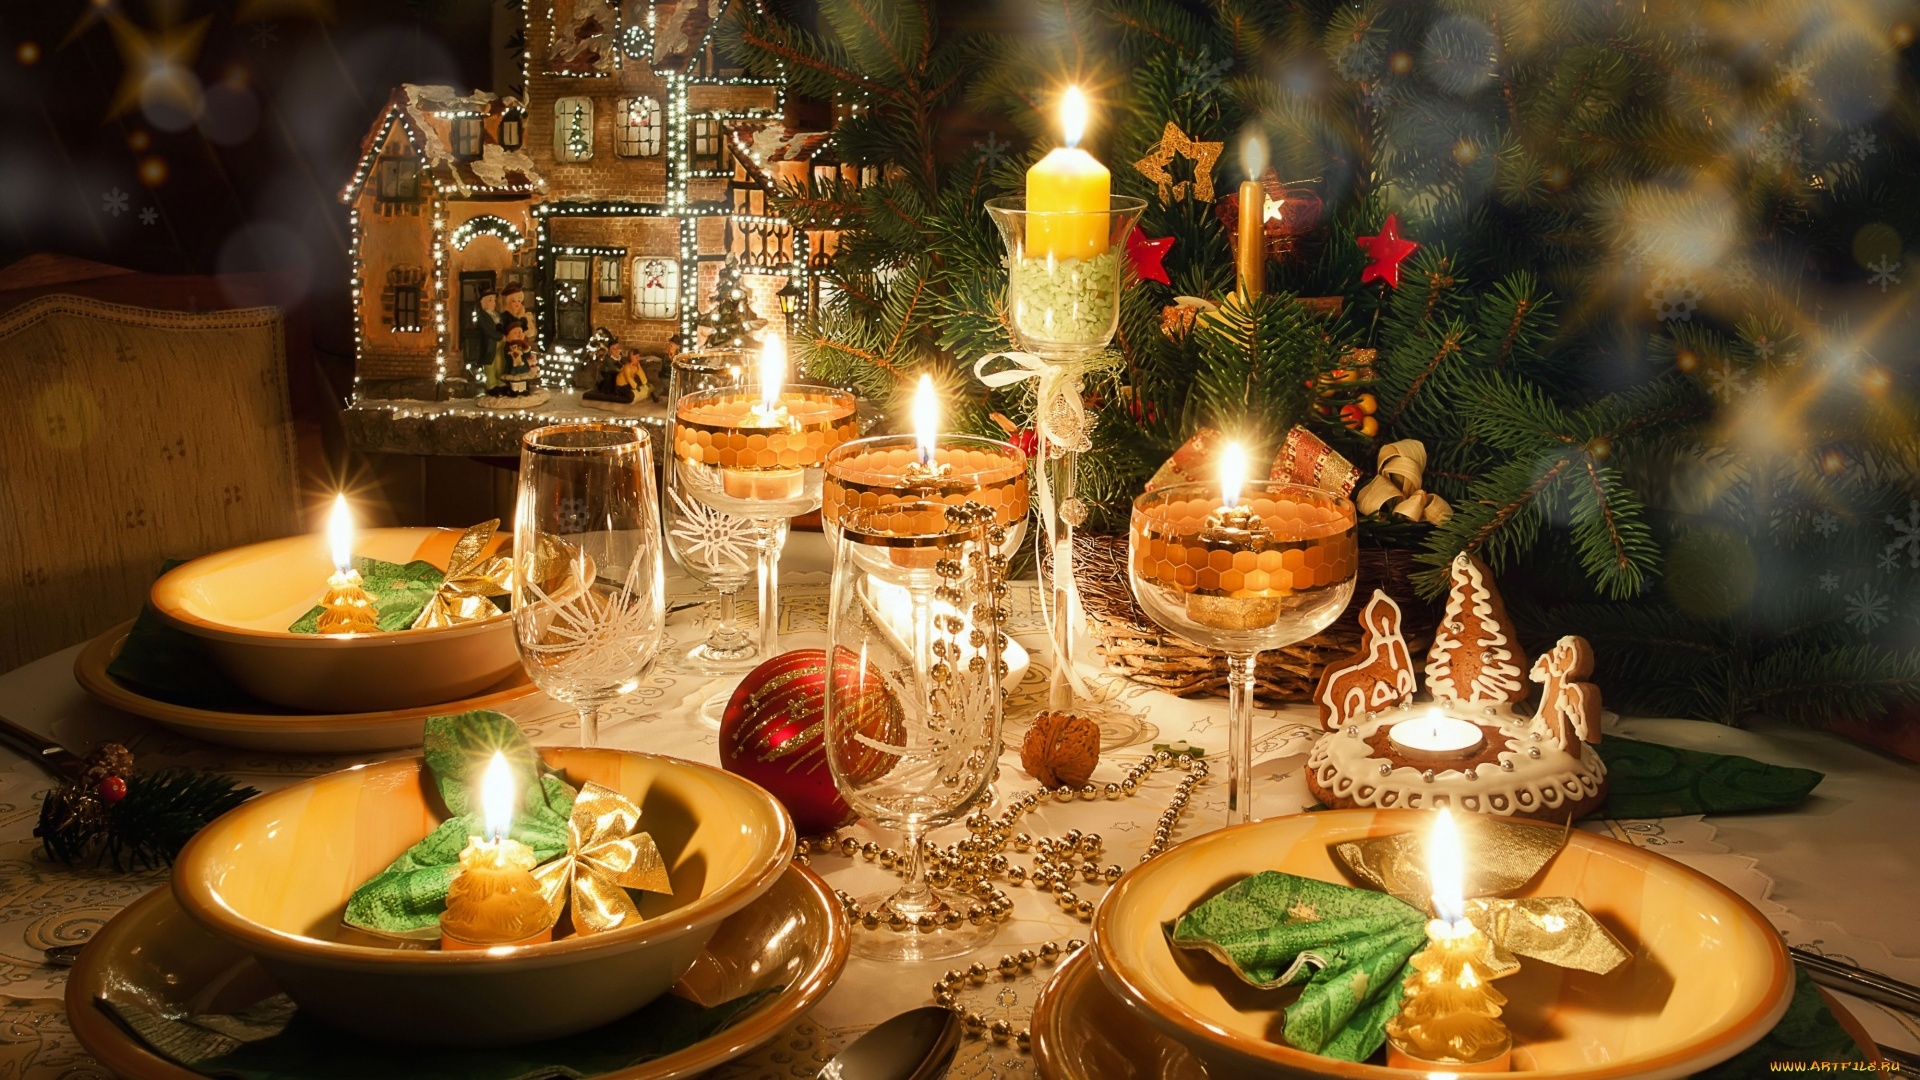 Christmas Dishes Image